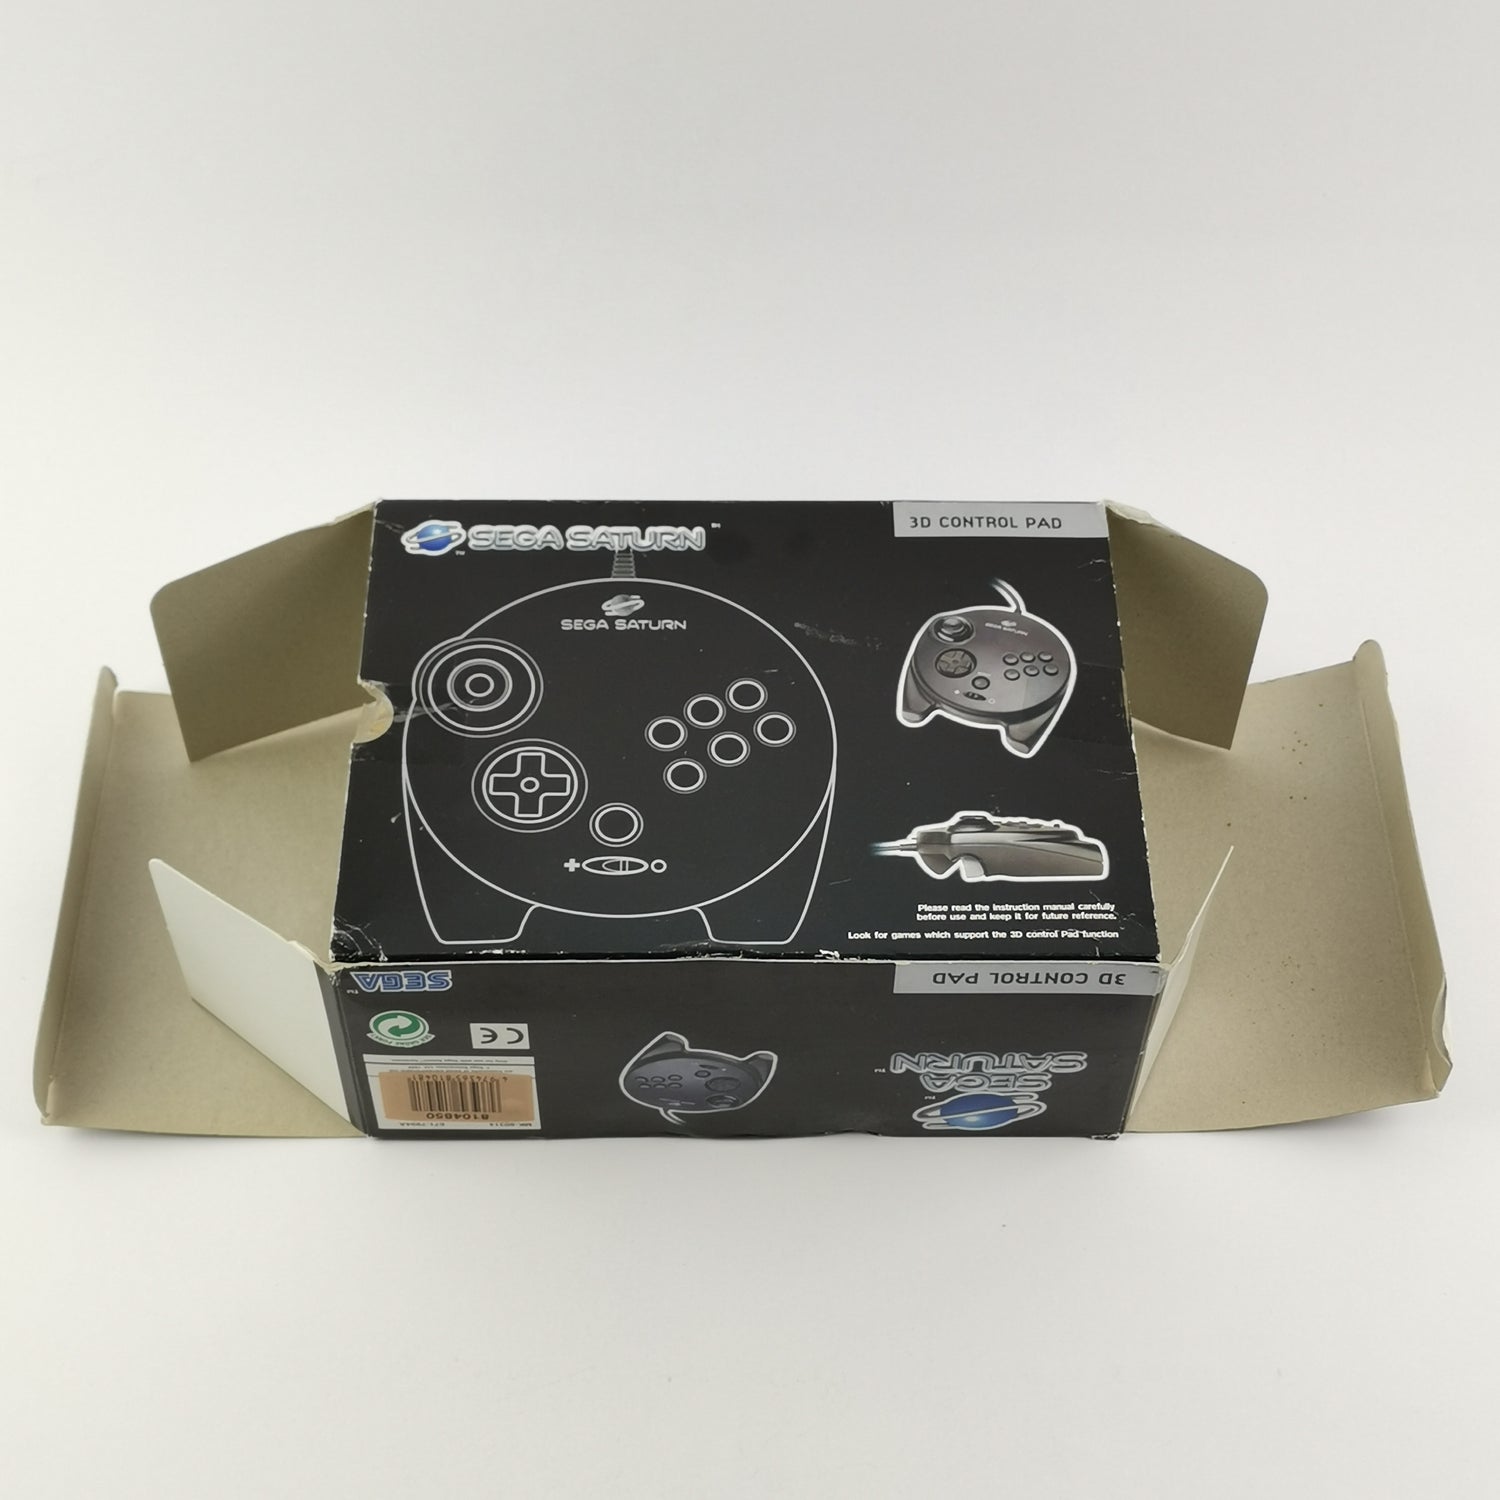 Sega Saturn game: Nights into Dreams + 3D Control Pad in original packaging NEW NEW SEALED